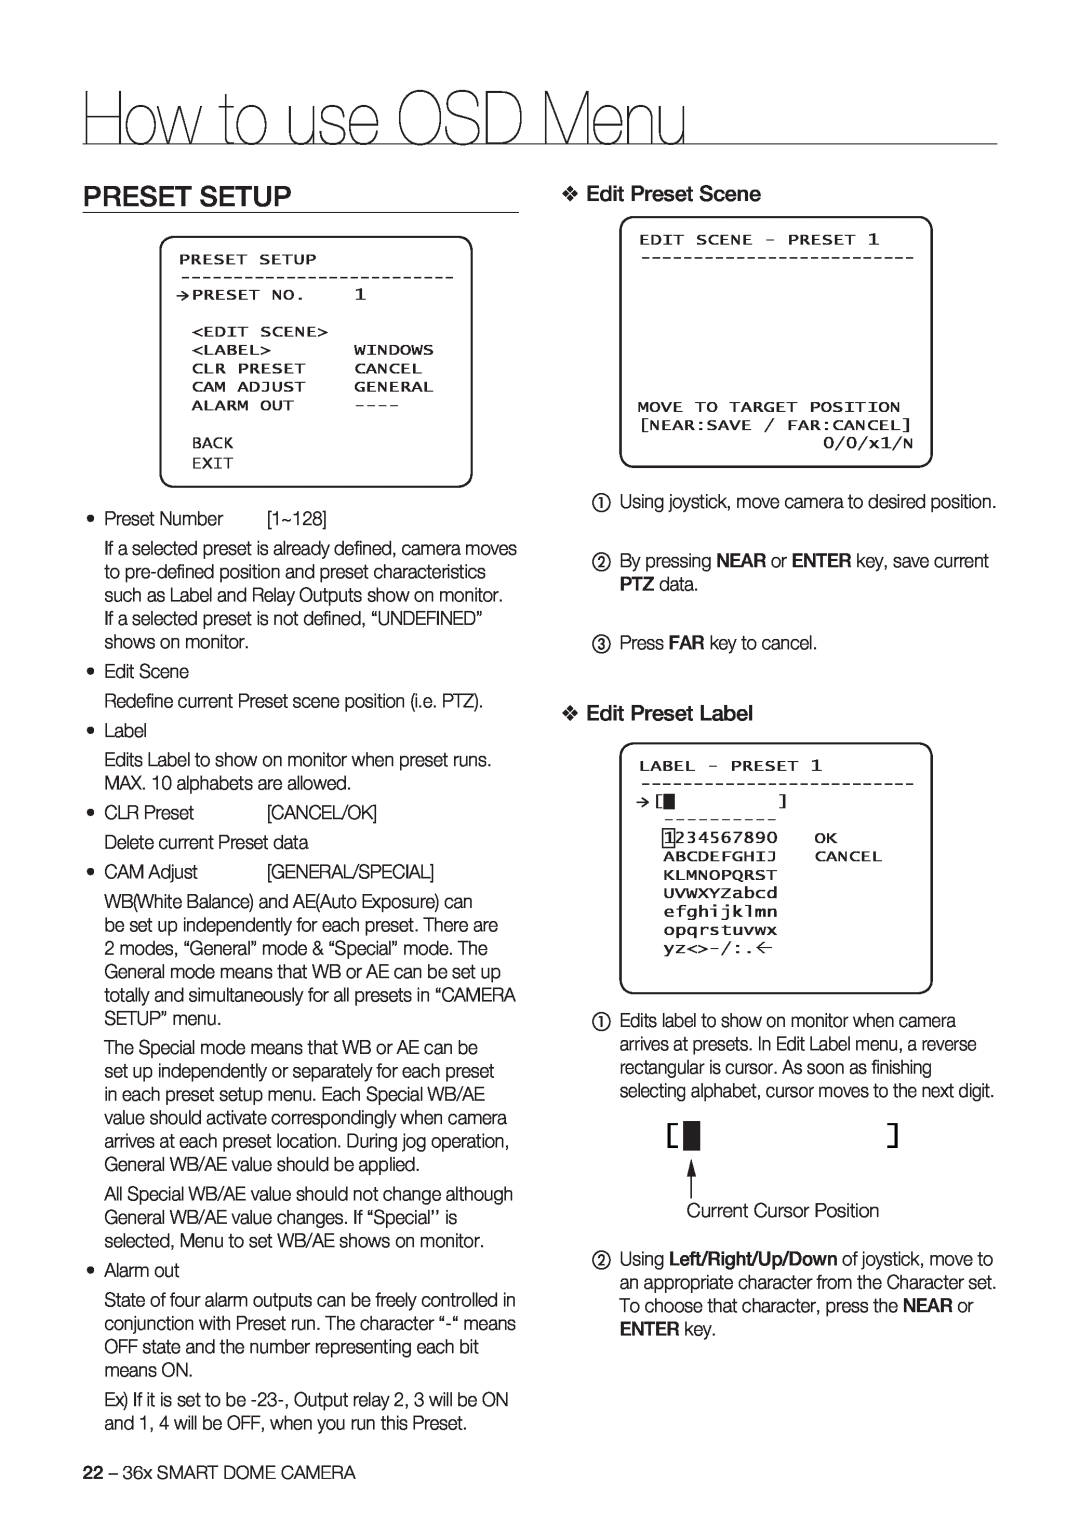 Samsung SCC-C7478P manual Preset Setup, Edit Preset Scene, Edit Preset Label, How to use OSD Menu 